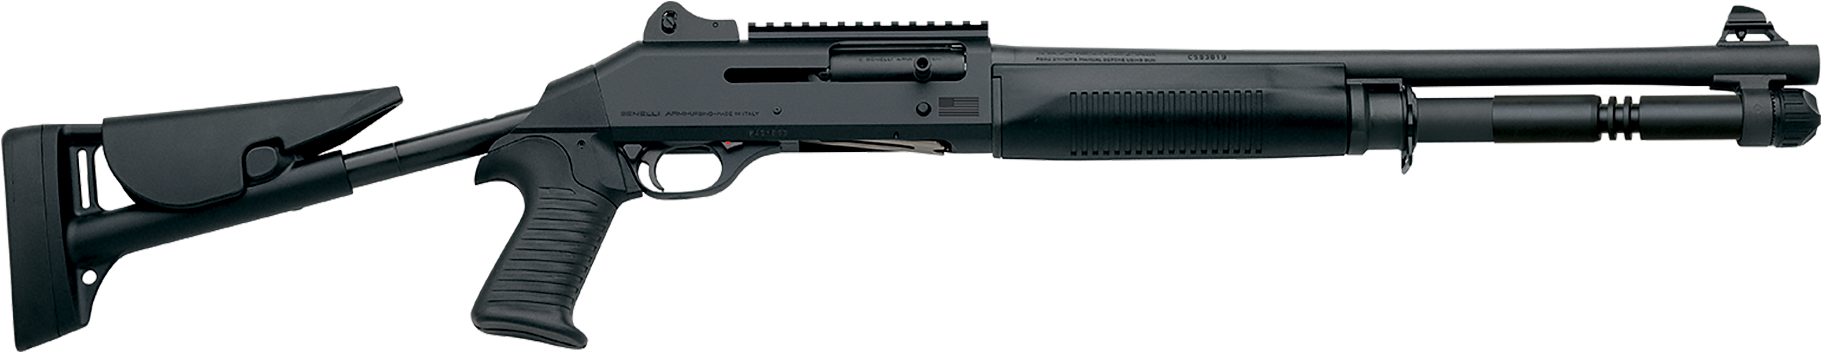 Tactical Shotgun Side View PNG